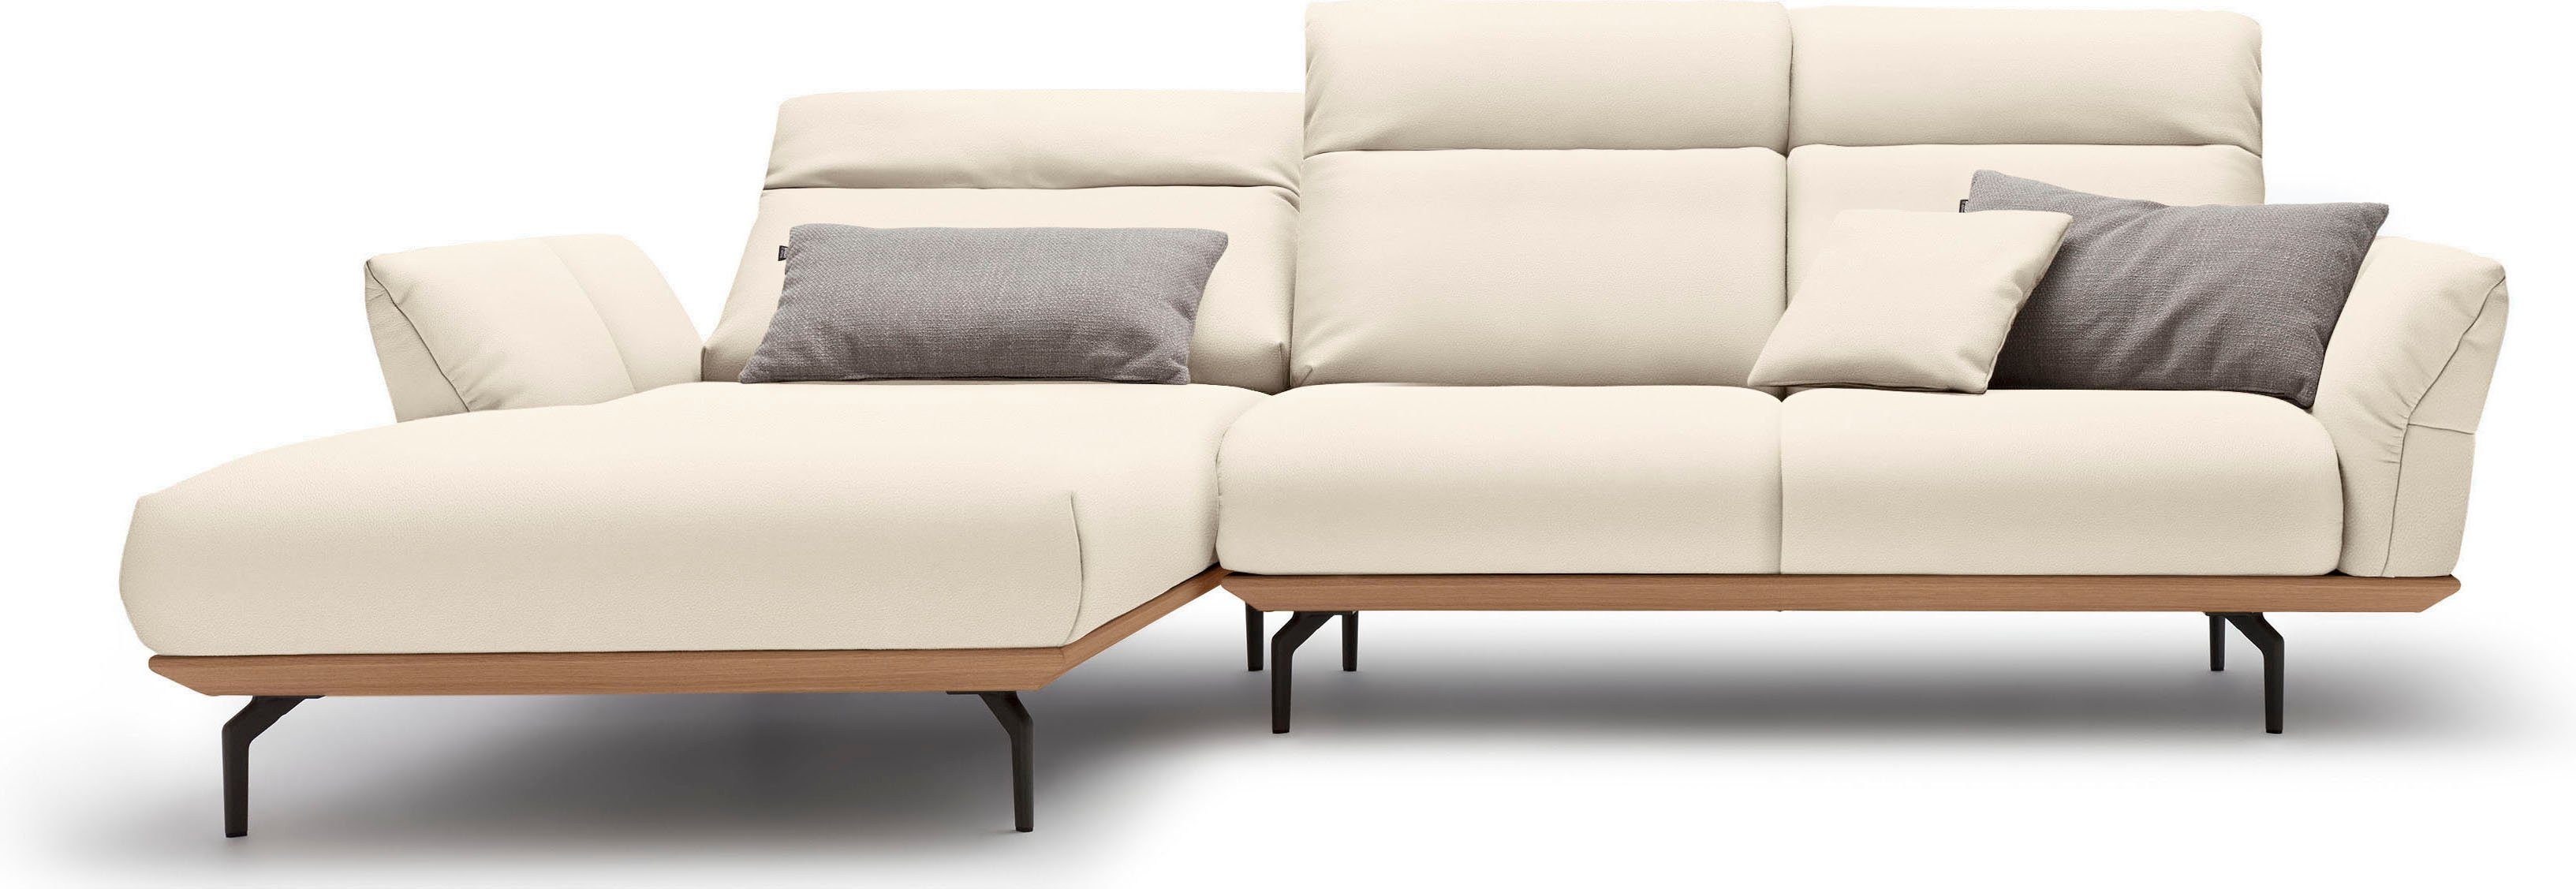 hülsta sofa Ecksofa hs.460, in in Eiche, cm umbragrau, Alugussfüße 298 Breite Sockel